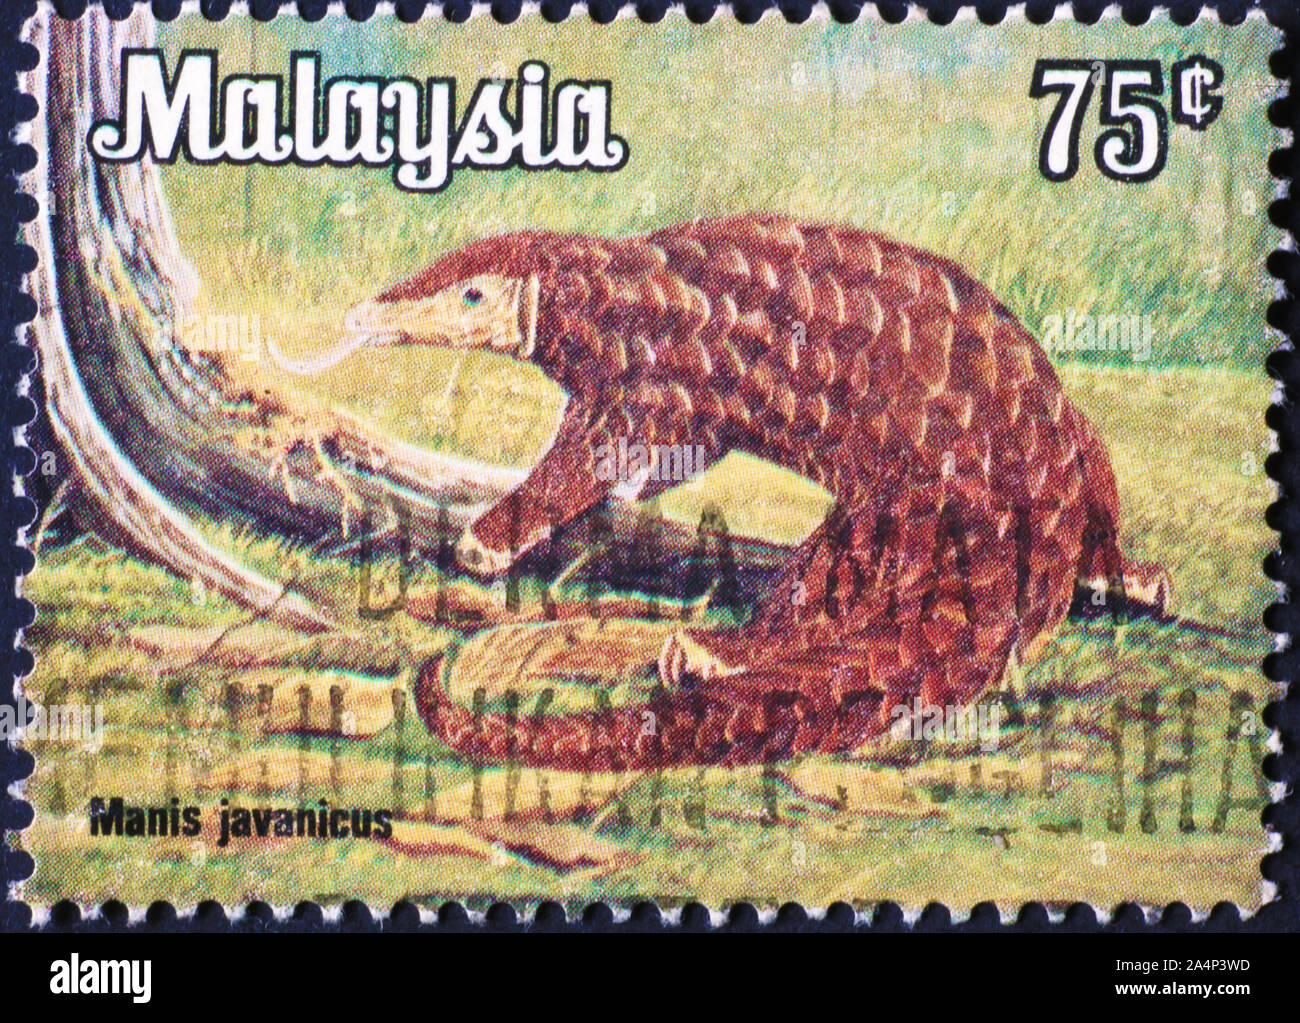 Pangolin on postage stamp of Malaysia Stock Photo